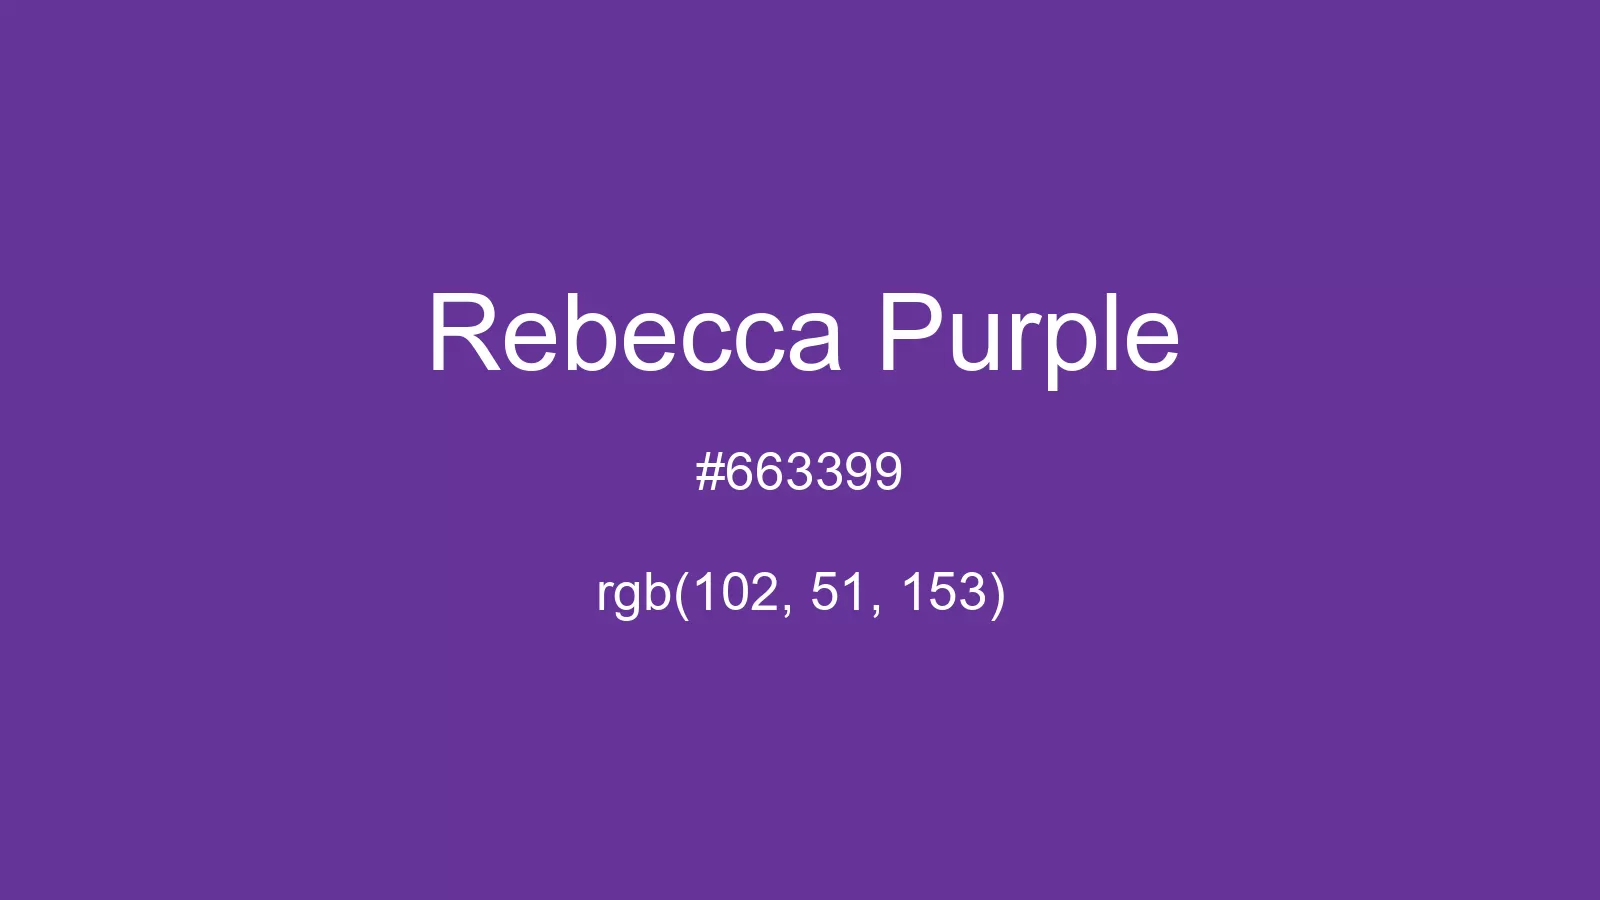 preview image of css Rebecca Purple color